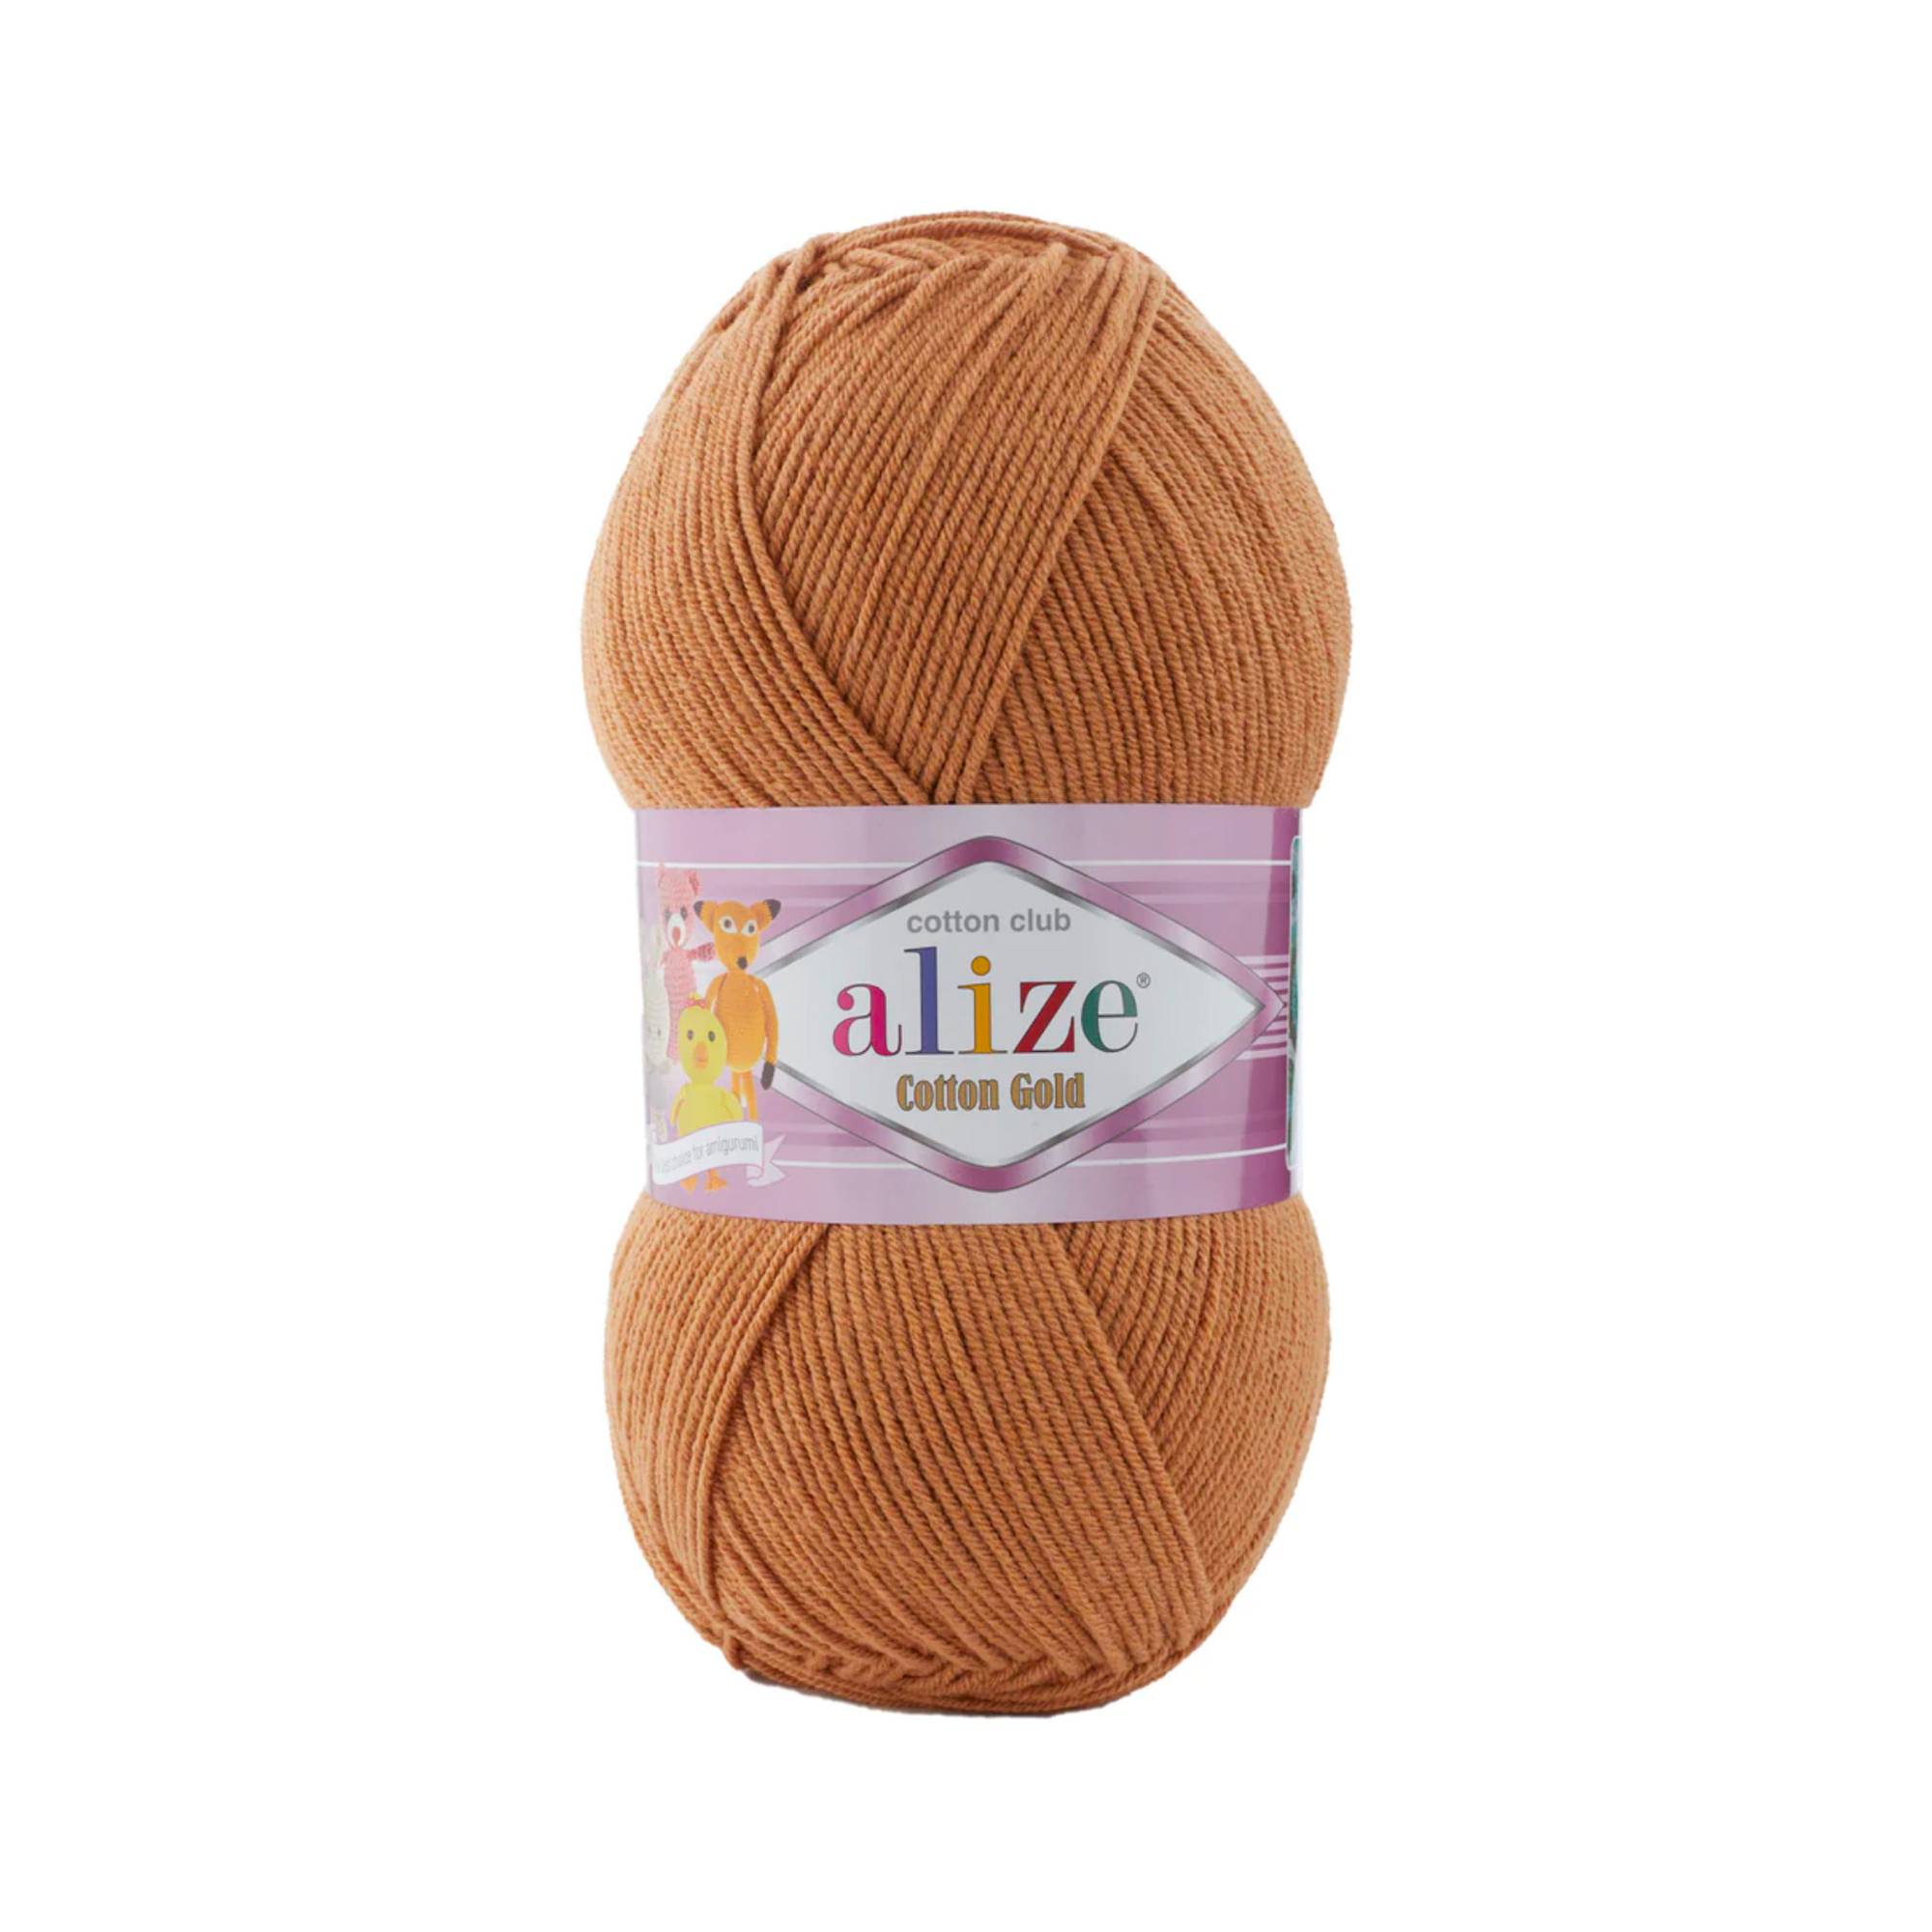 Alize Cotton Gold Knitting Yarn, Cream - 01